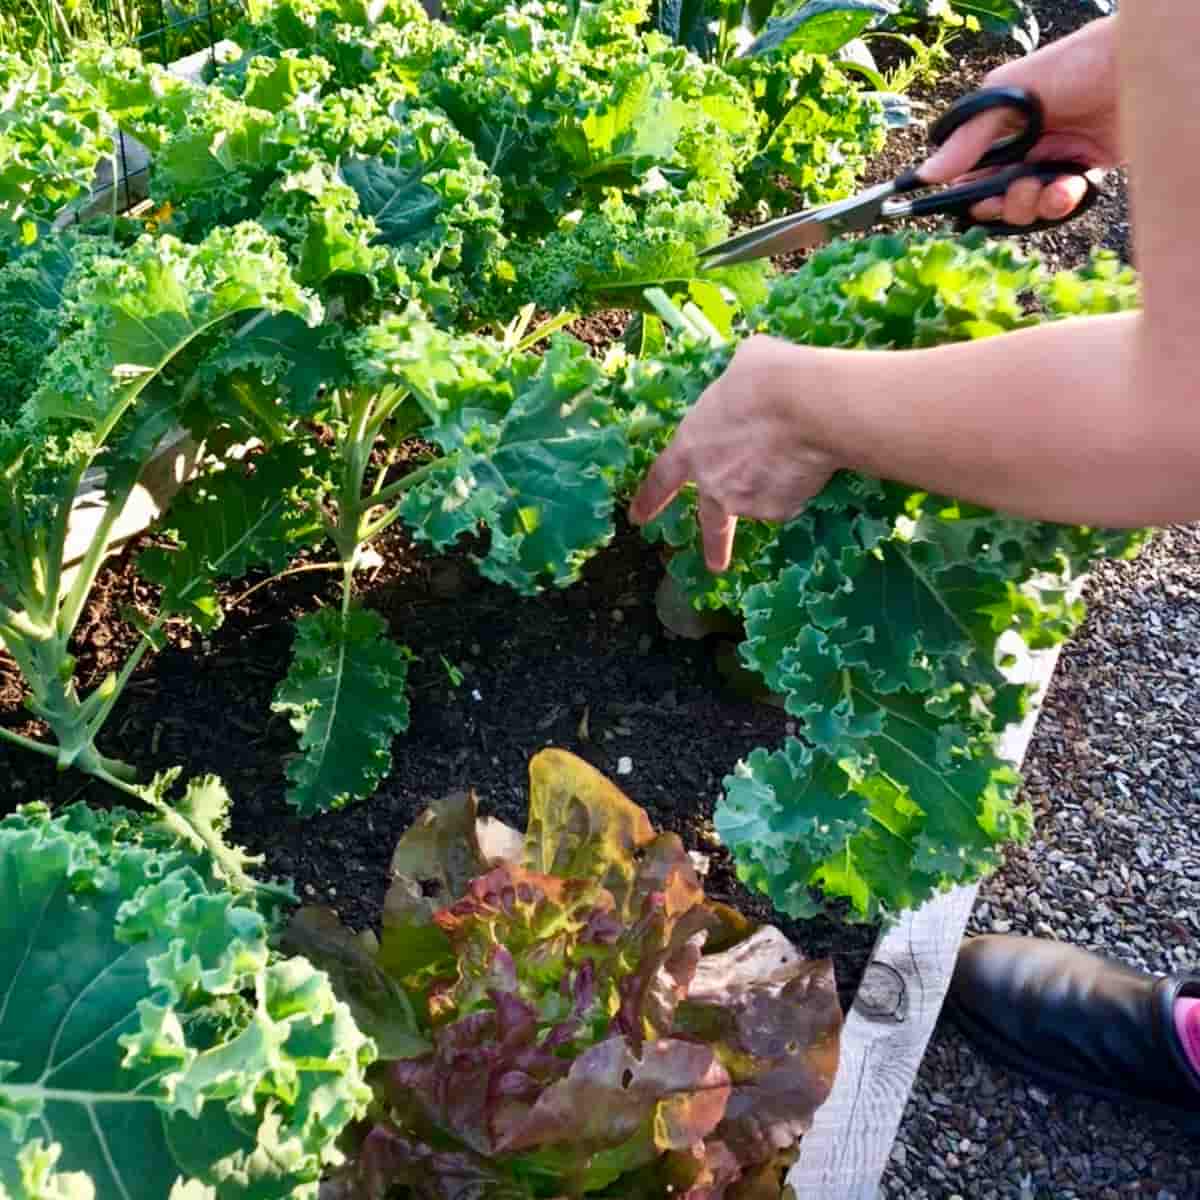 Kale Harvesting